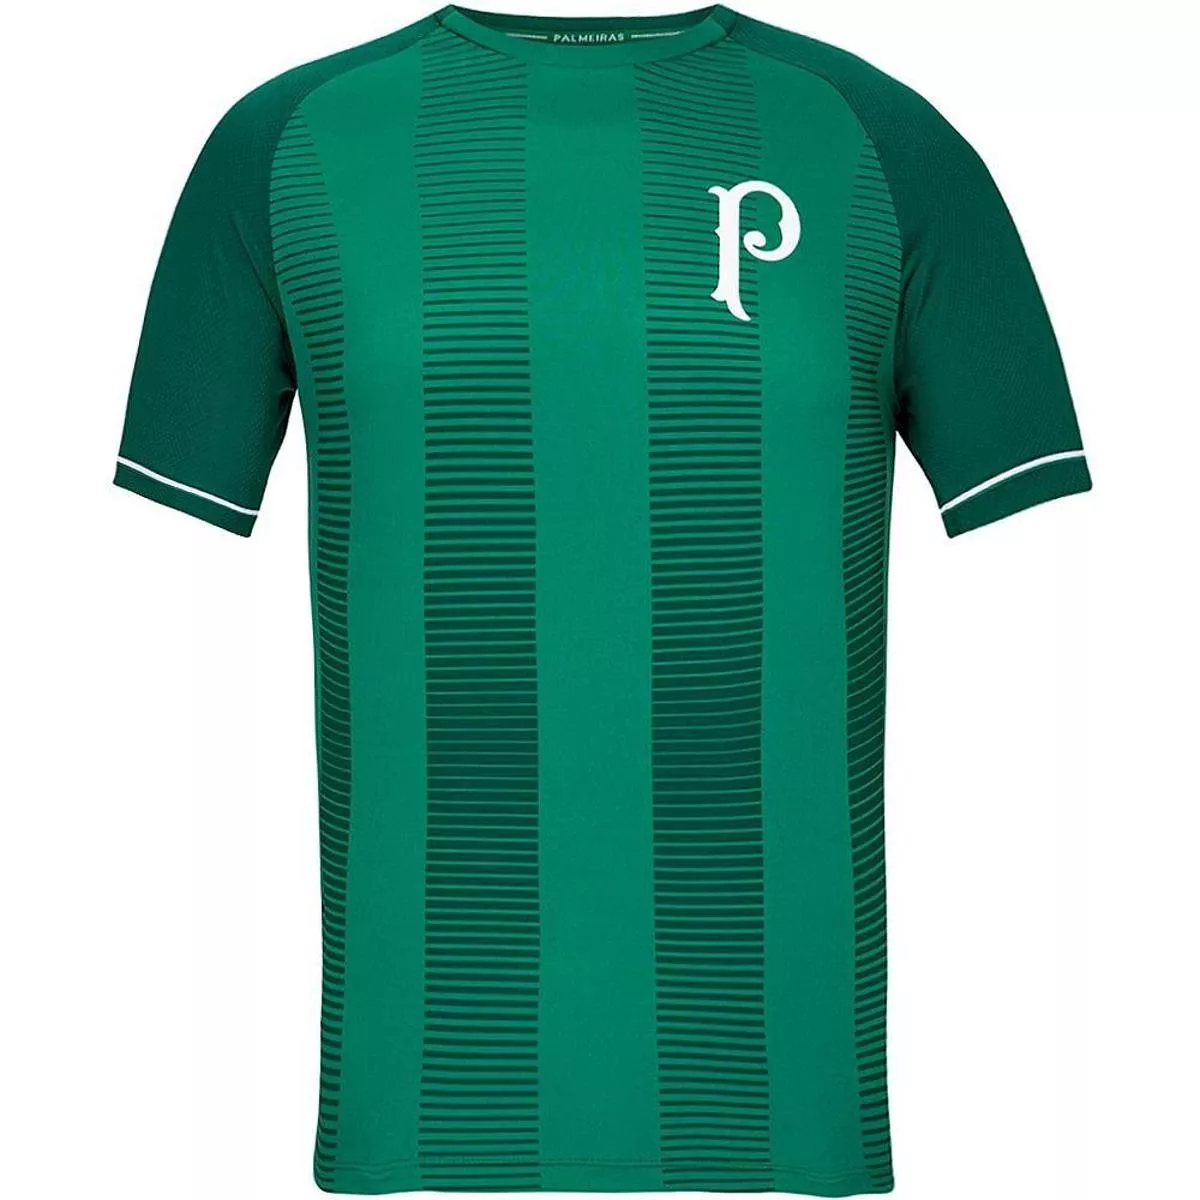 Camisa Palmeiras Away, Tecnologia Dry - Masculina